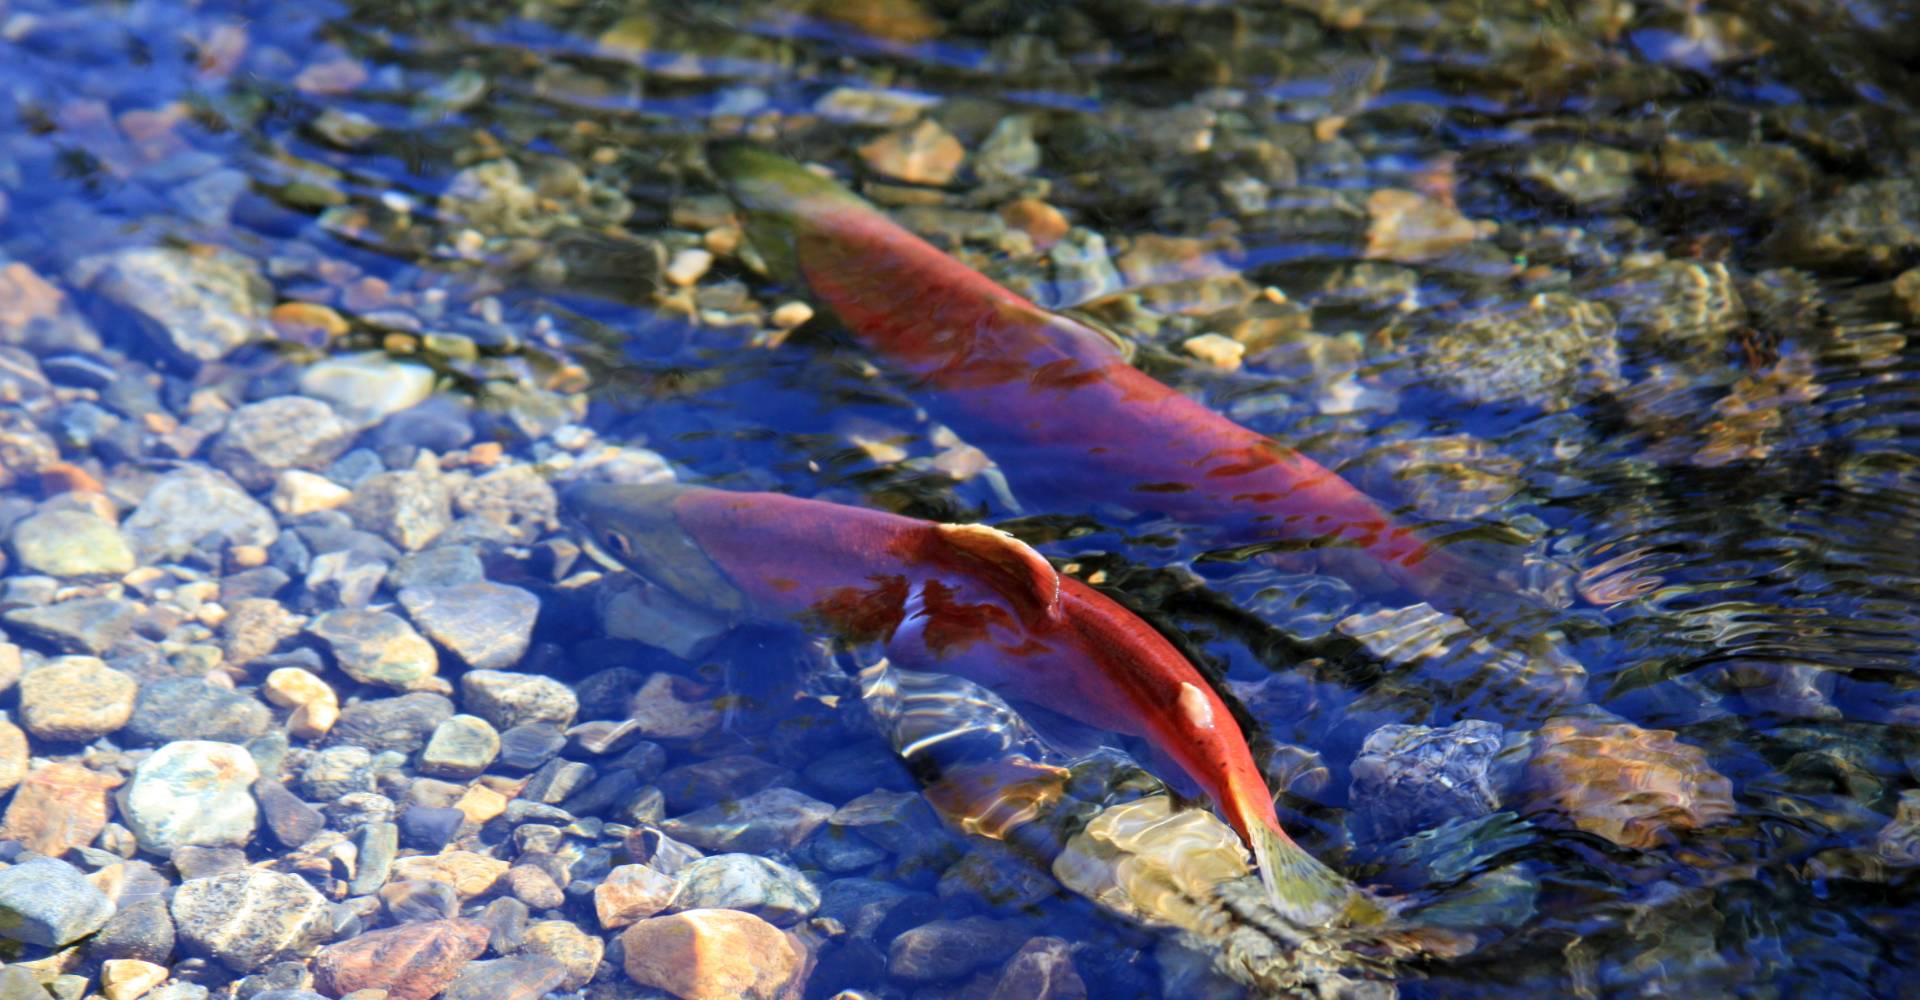 two salmon swimming in the water near rocks